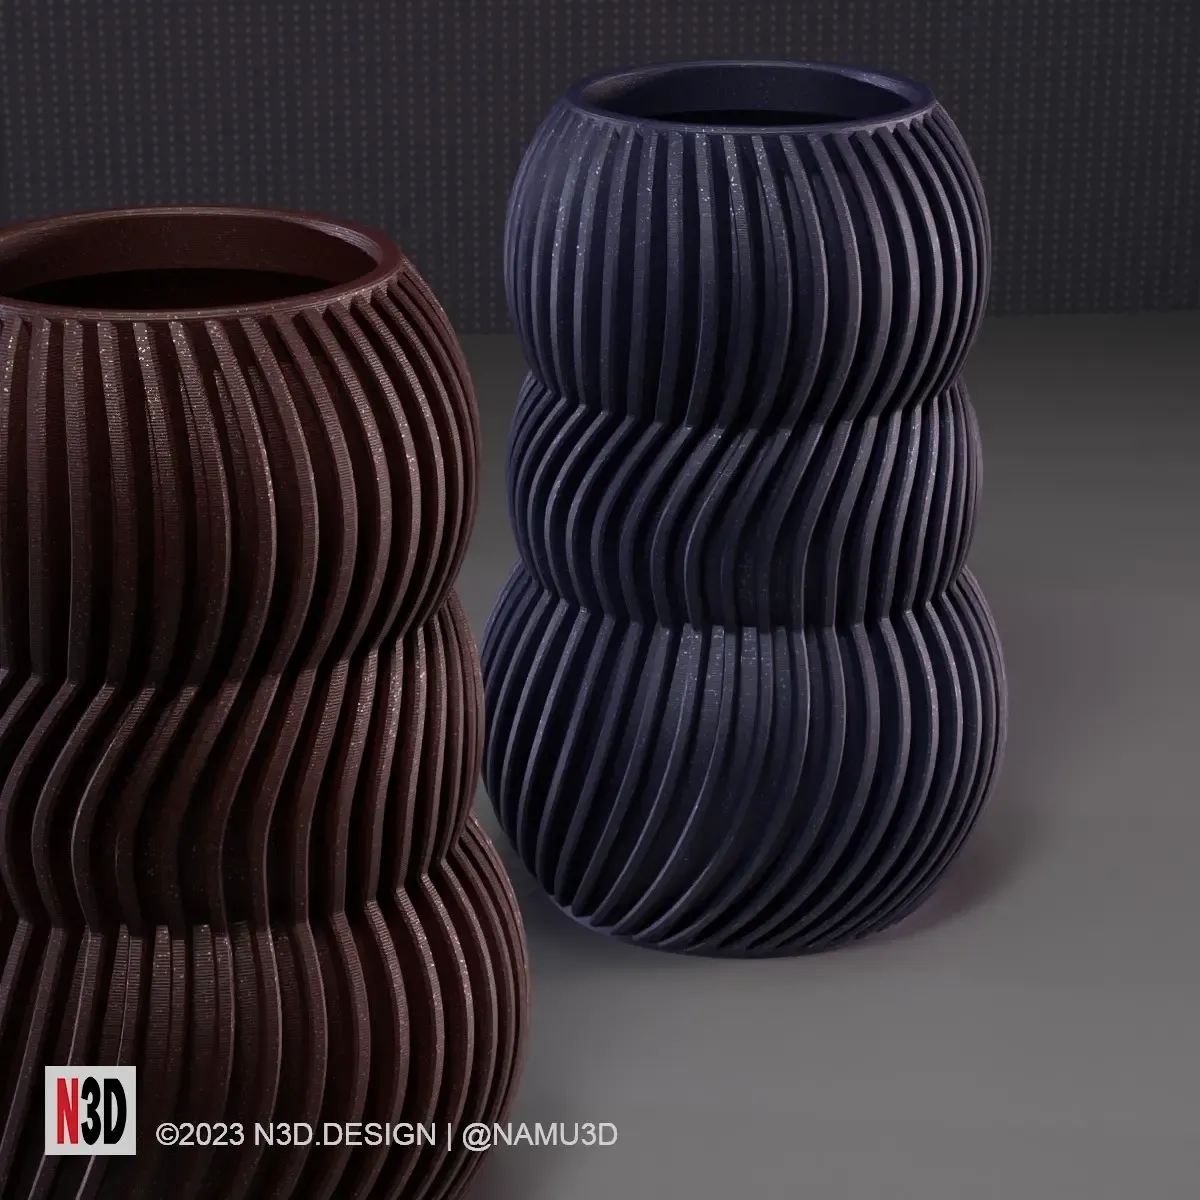 Vase 0003 - Stripped bubbles vase